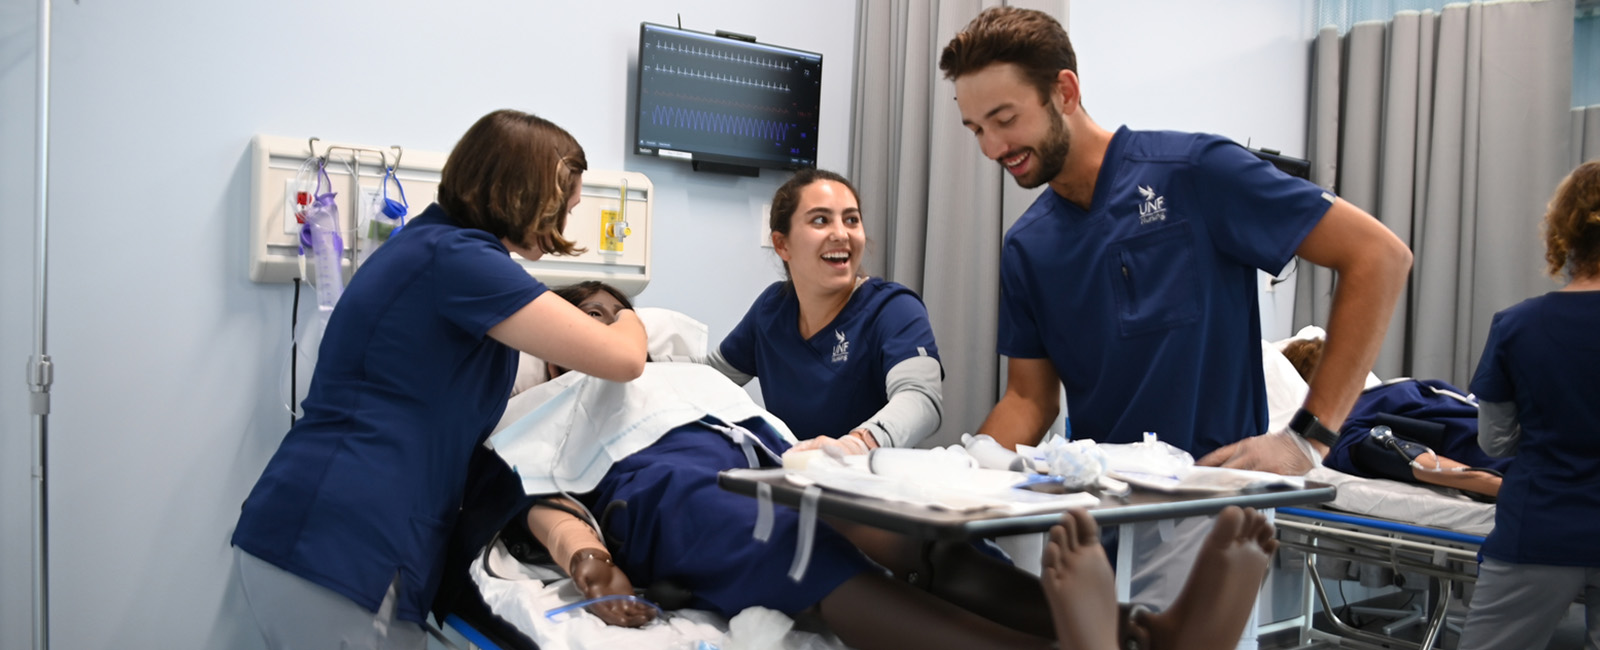 three nursing students working on a test dummy in hospital setting